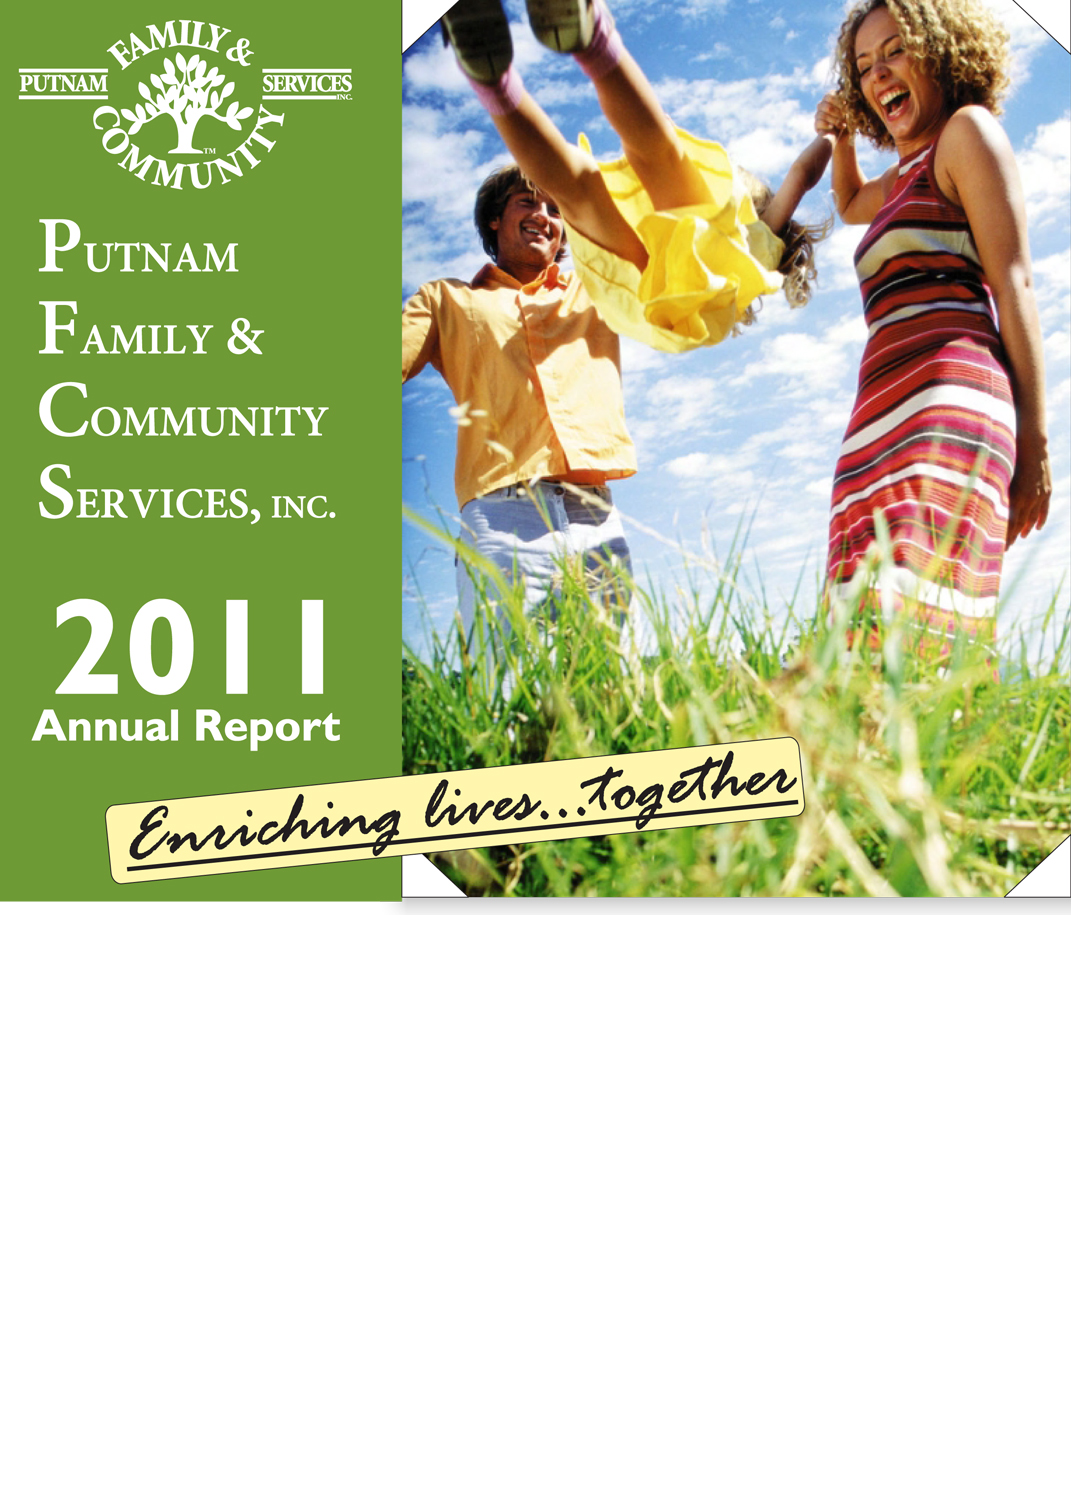 Annual Report - 2011